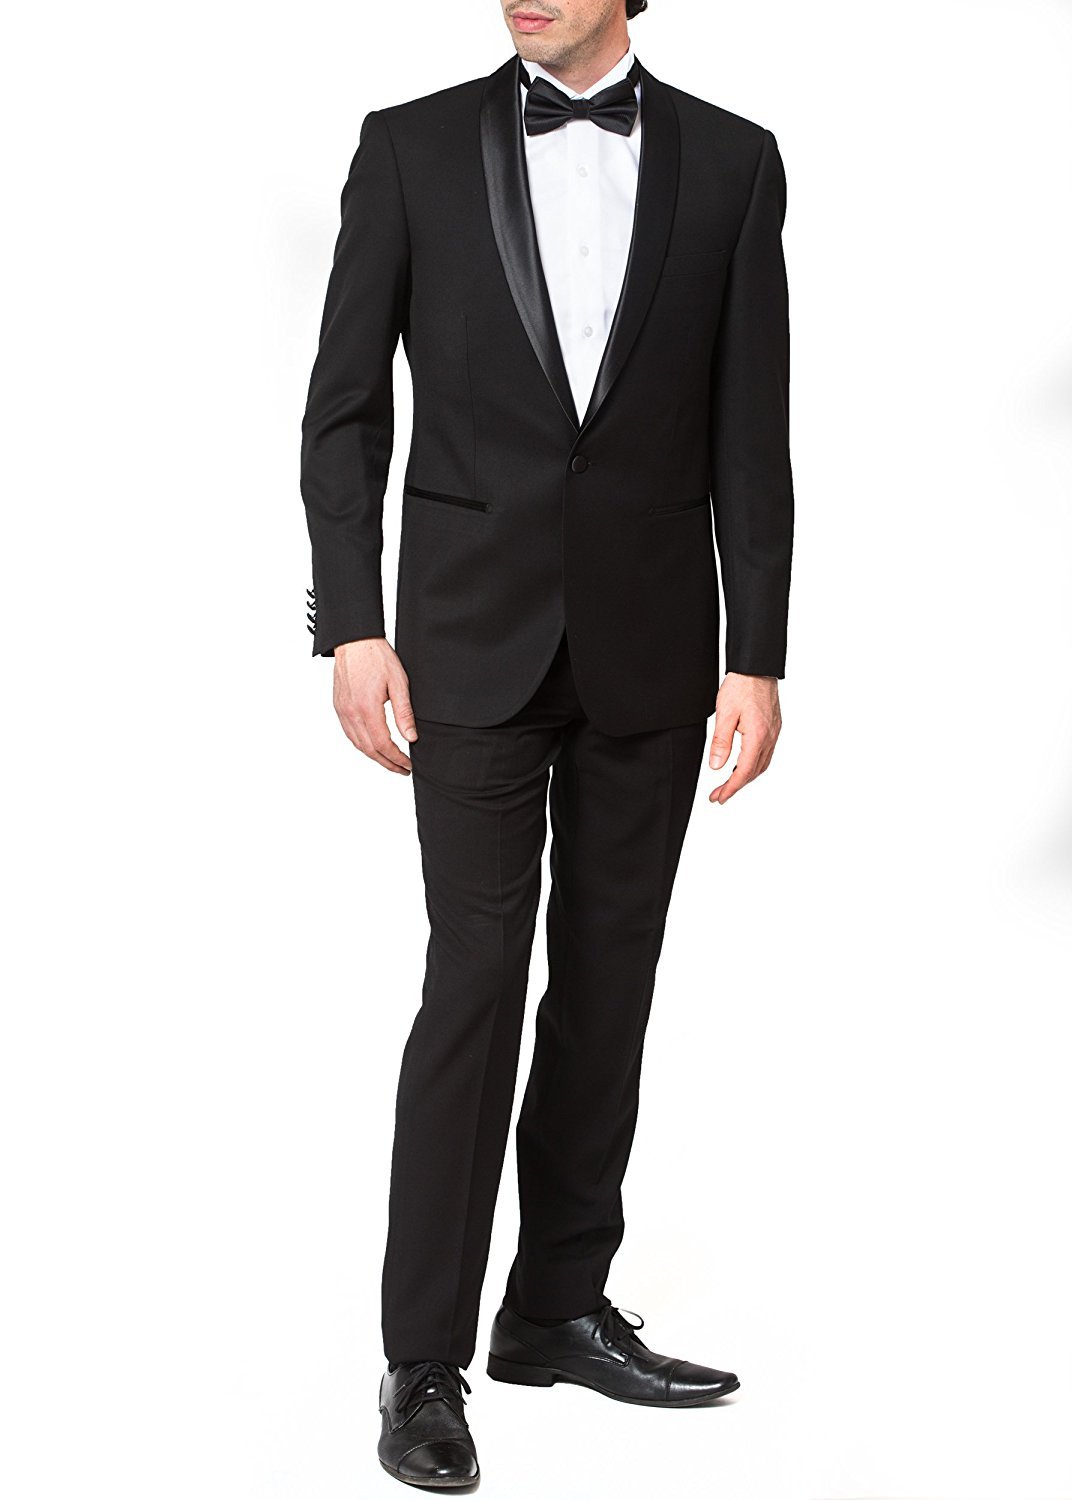 Giorgio Fiorelli Men’s G47815/1 One Button Modern Fit Two-Piece Shawl Collar Tuxedo Suit Set - Black - 42S - image 2 of 5